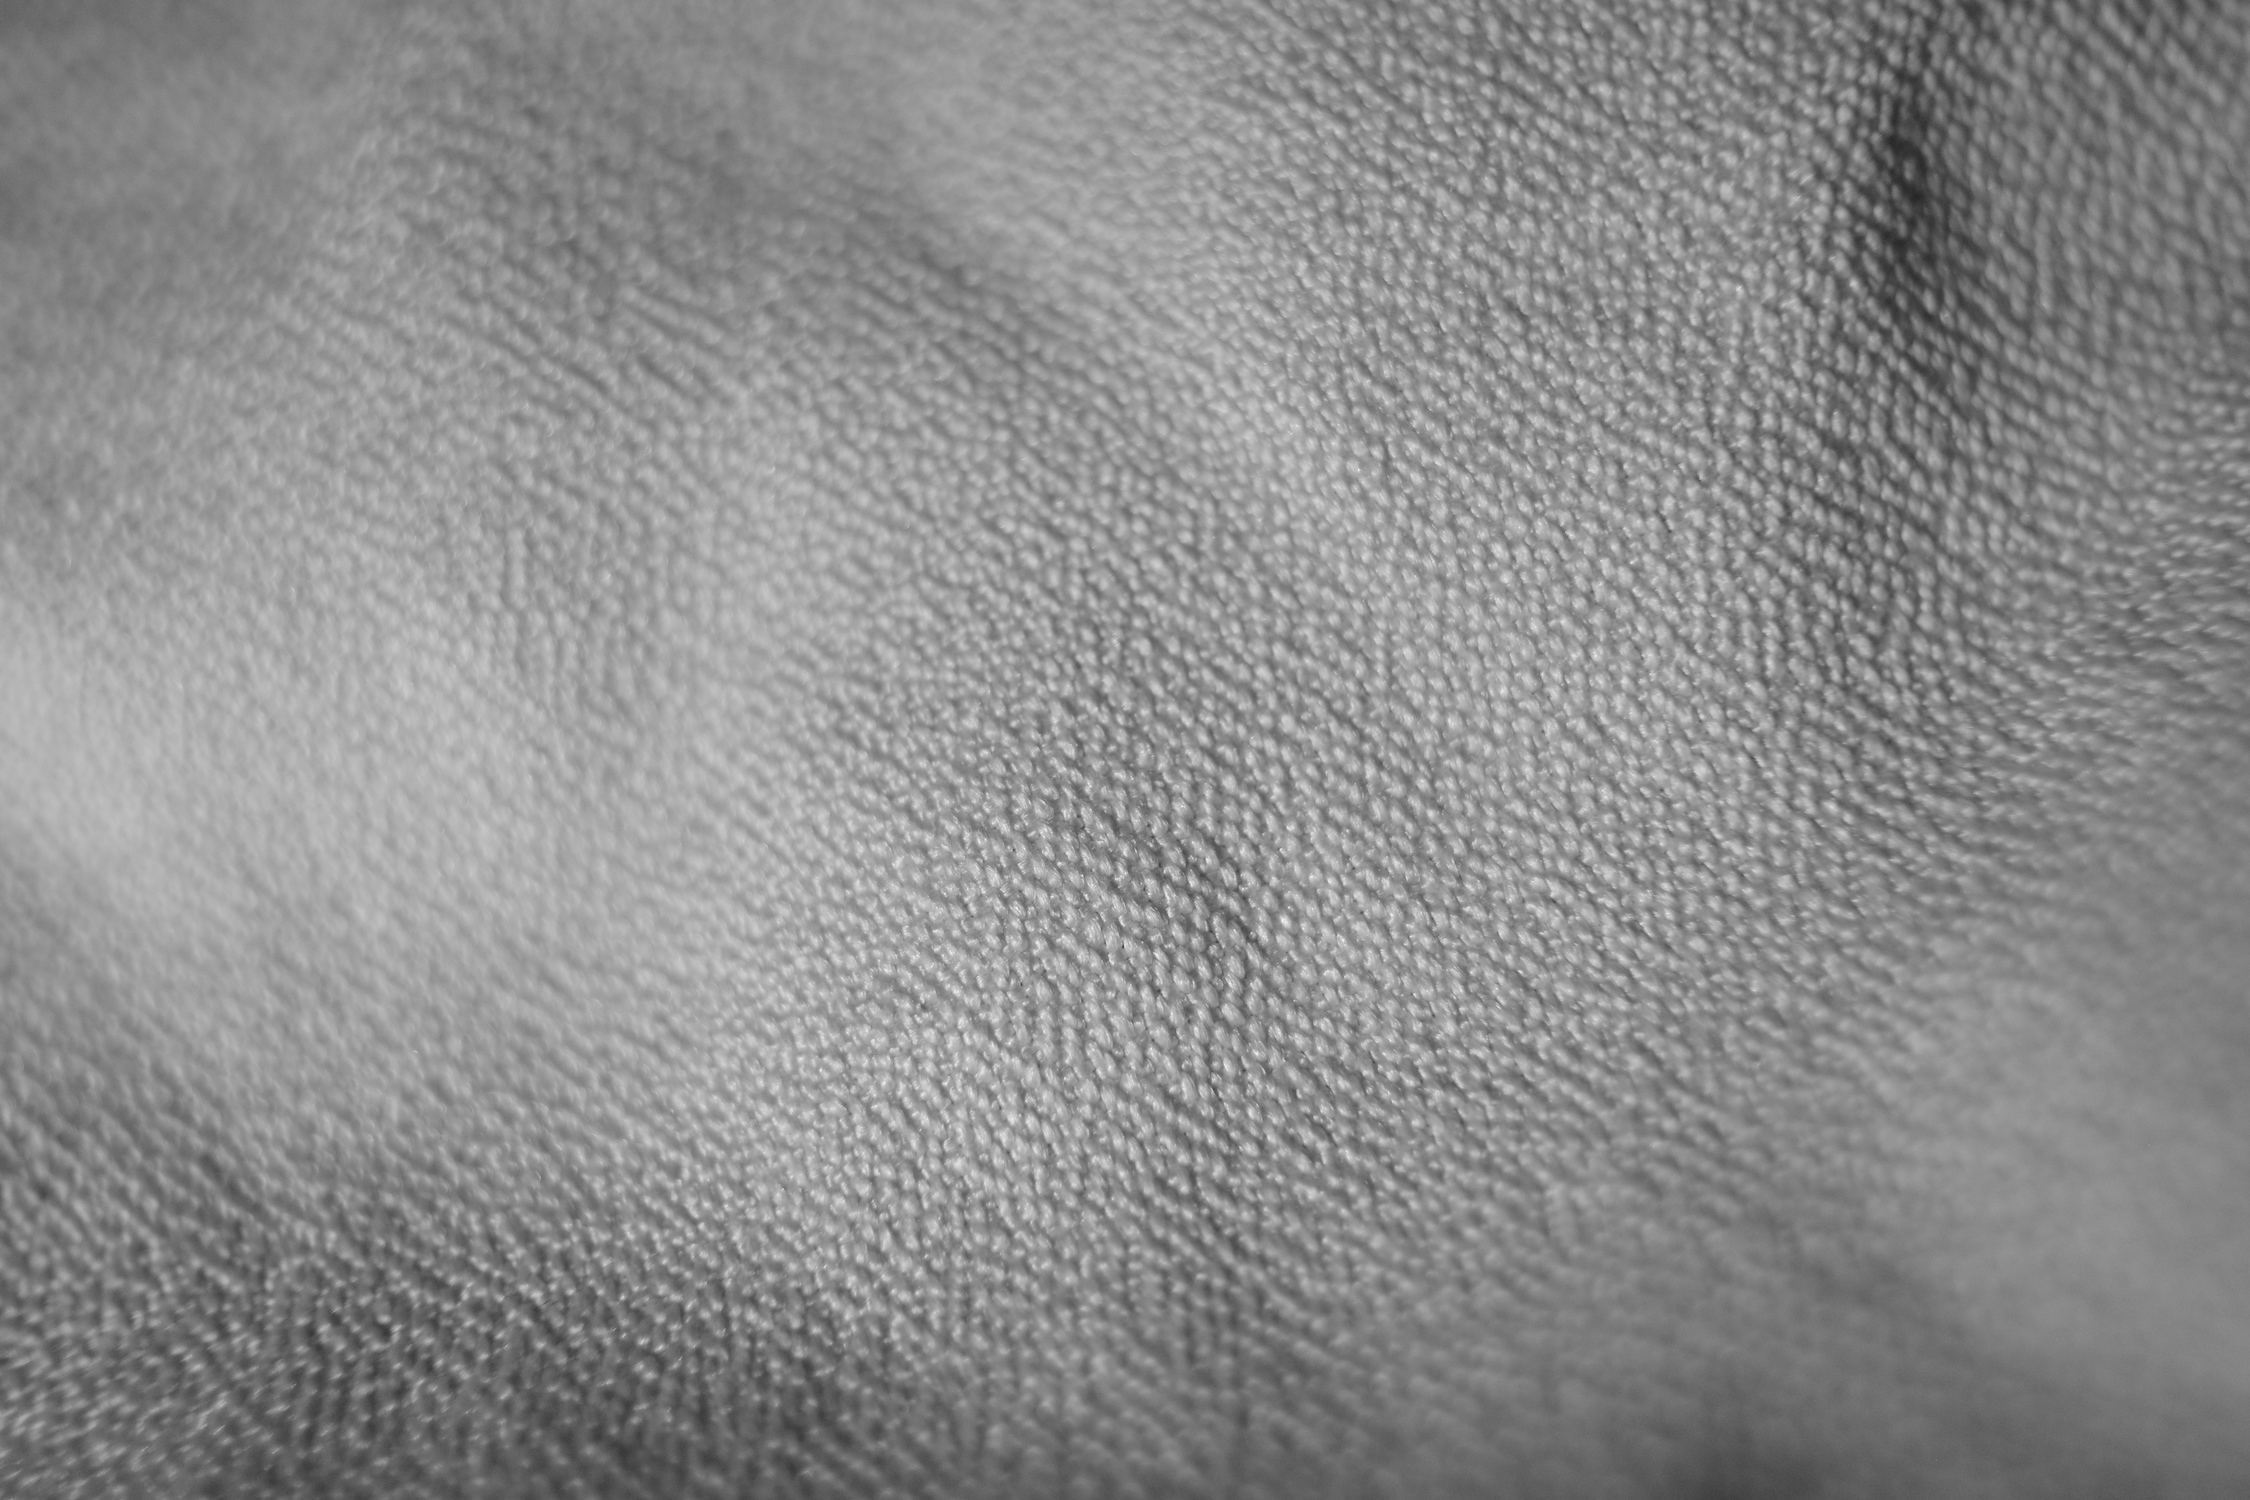 Microfiber cloth close-up, black-and-white photo.